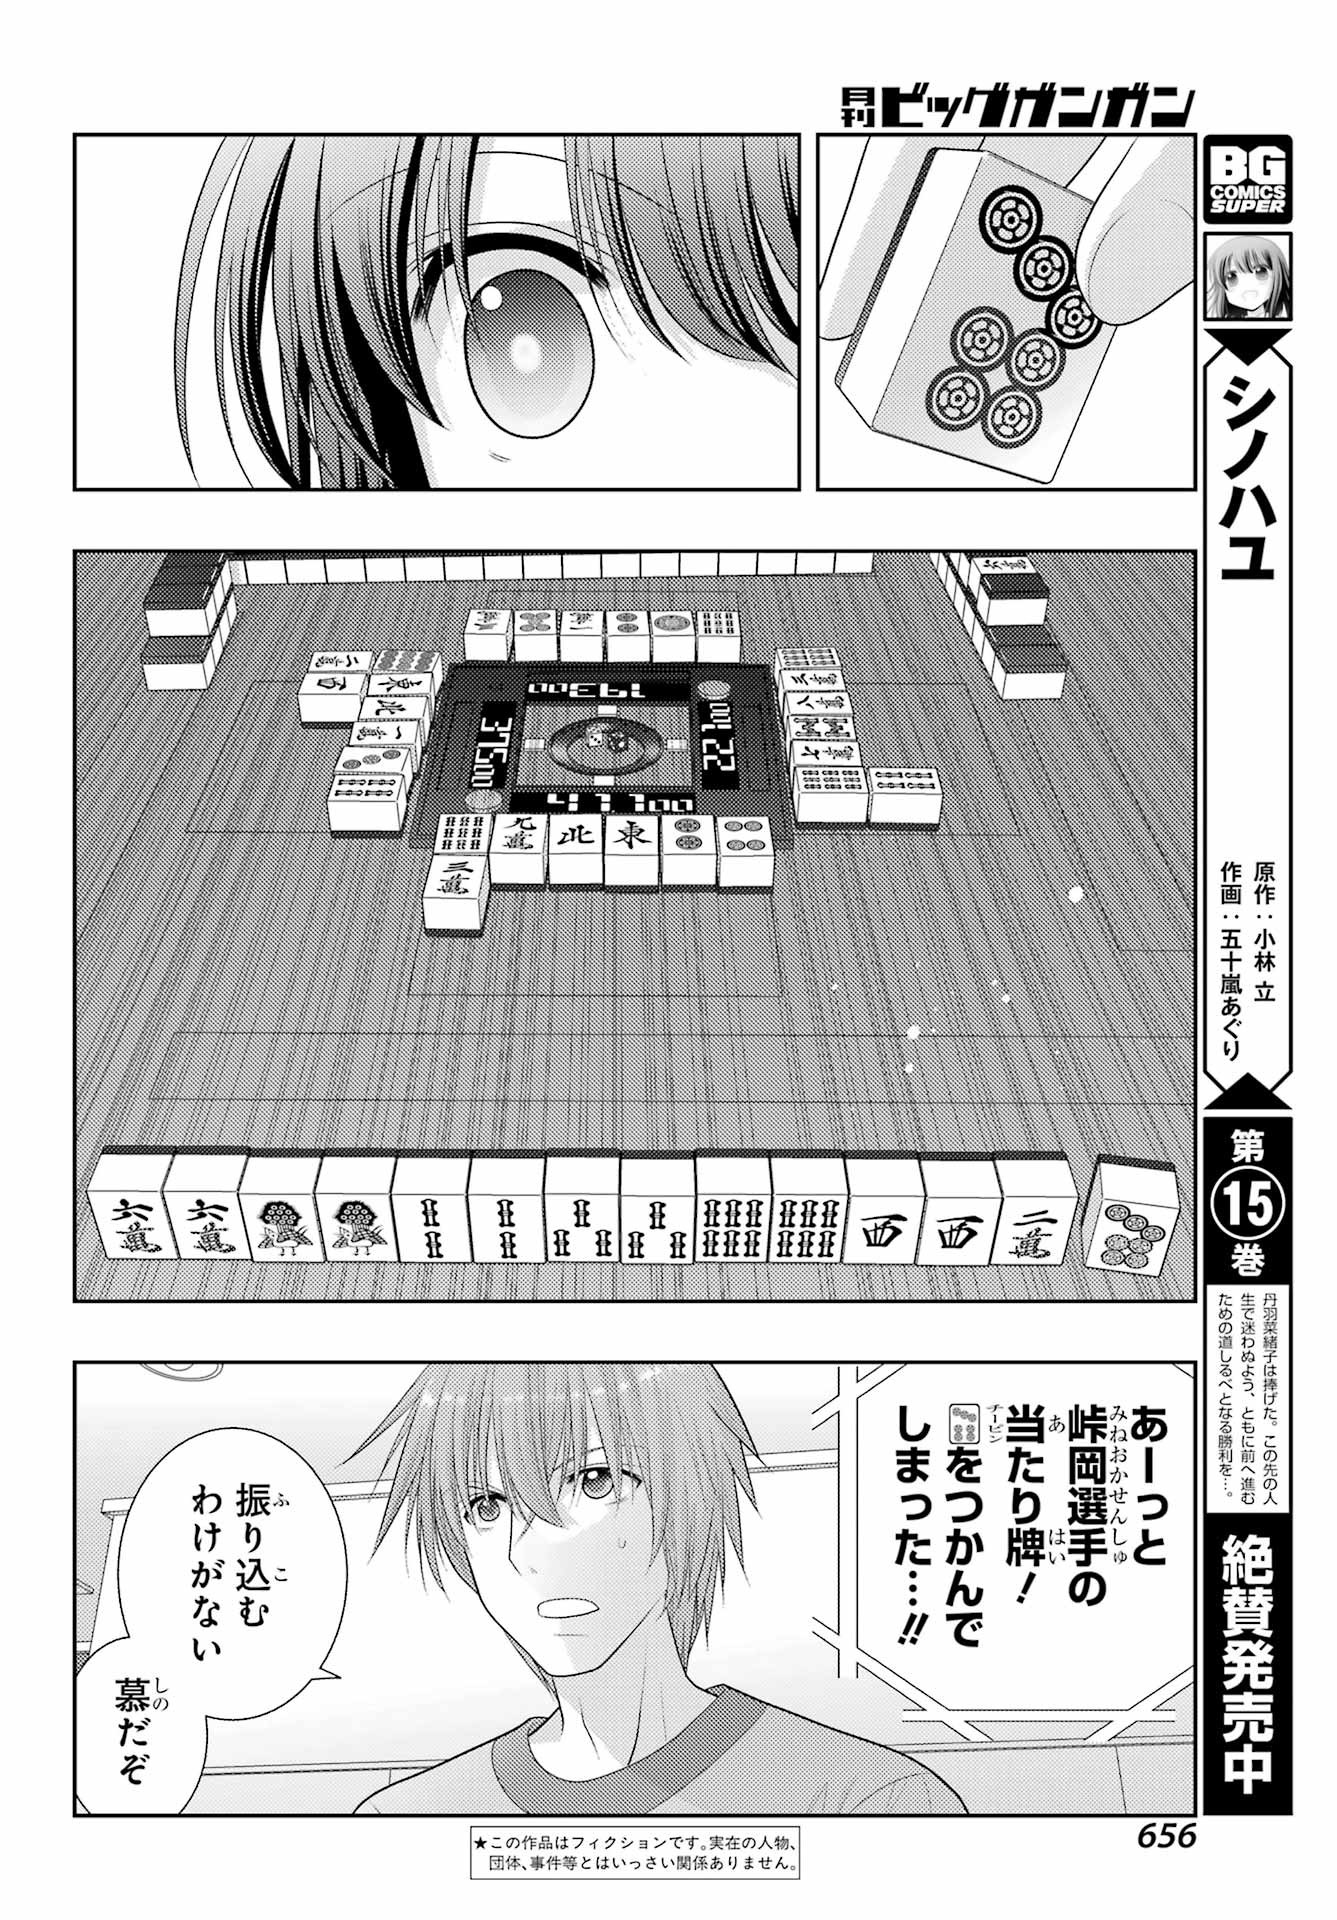 Shinohayu - The Dawn of Age Manga - Chapter 099 - Page 2